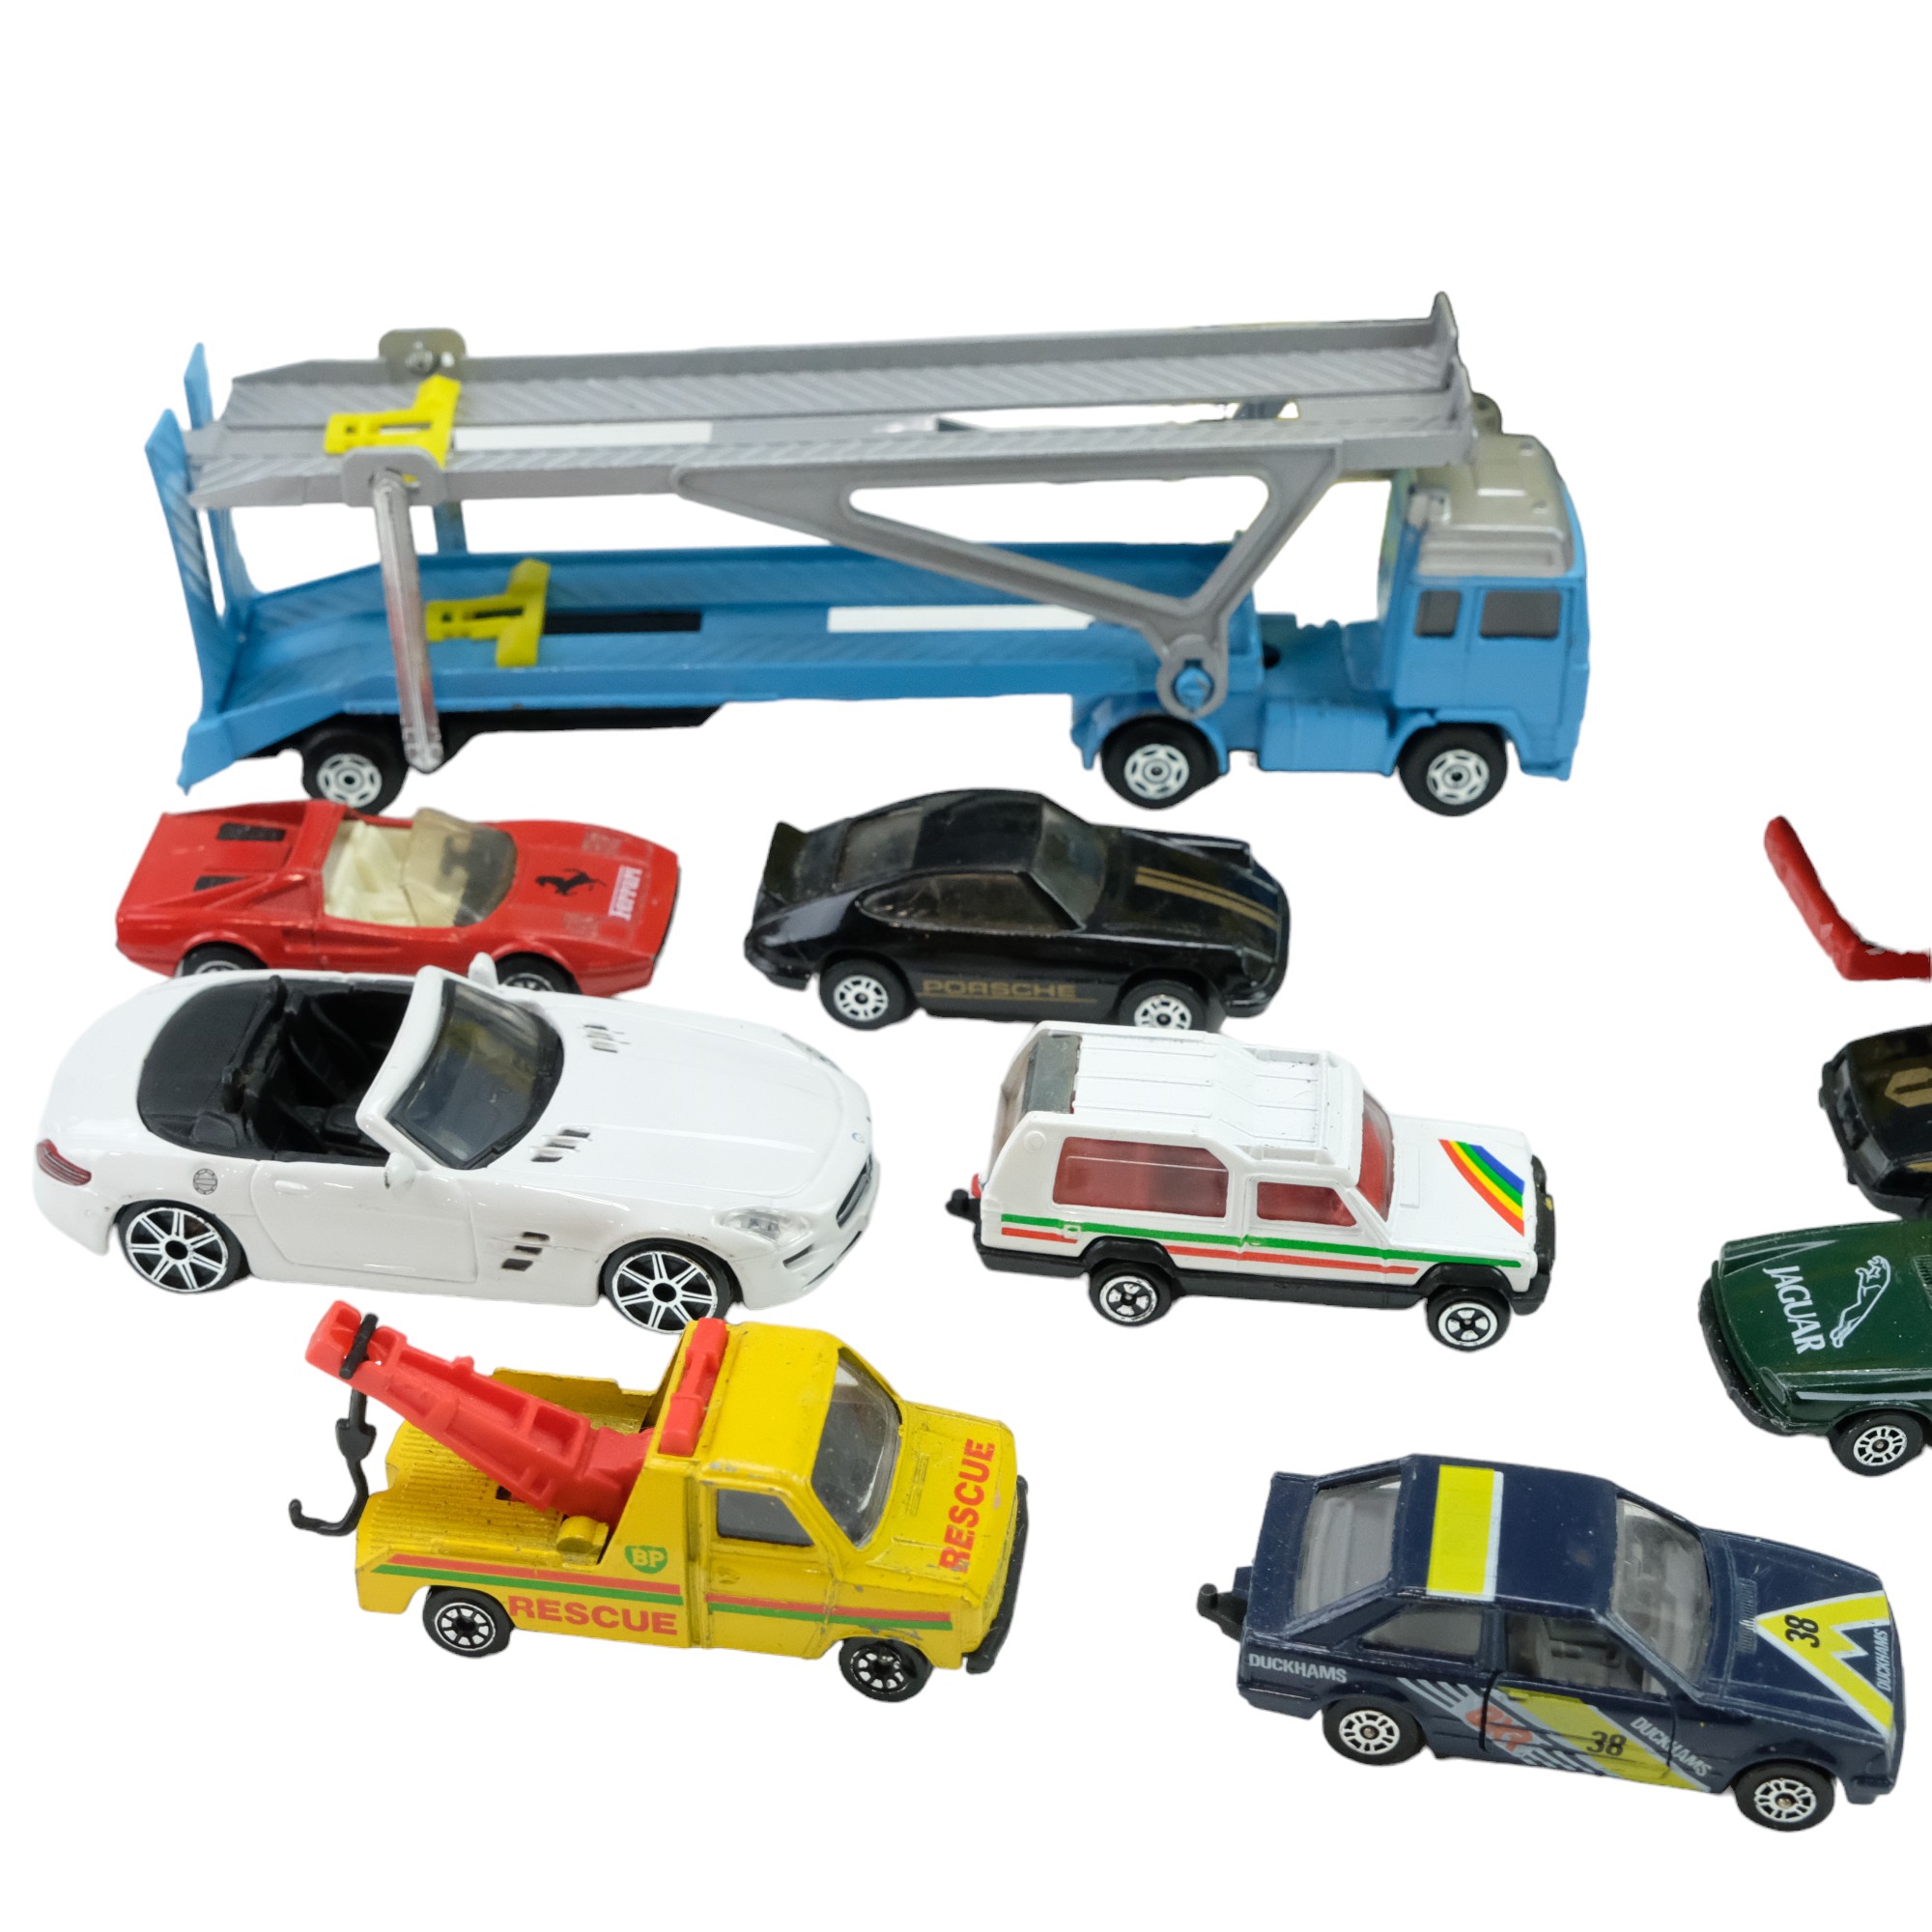 Corgi and Matchbox diecast model cars and wagons including a Coca-Cola wagon, play-worn - Bild 3 aus 4